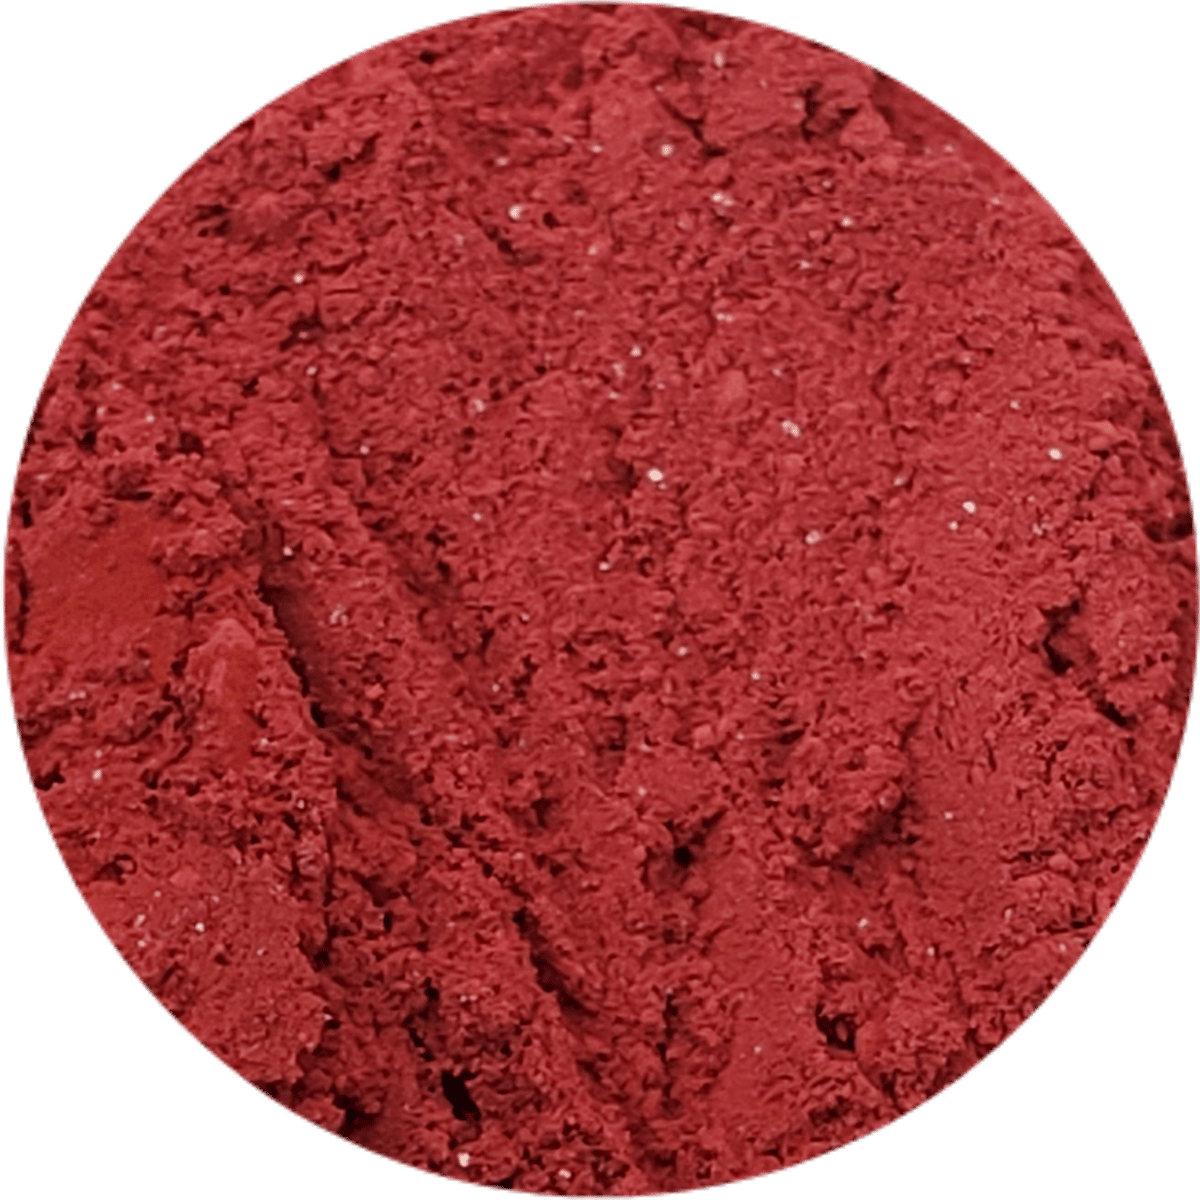 Raspberry Powder Pigment